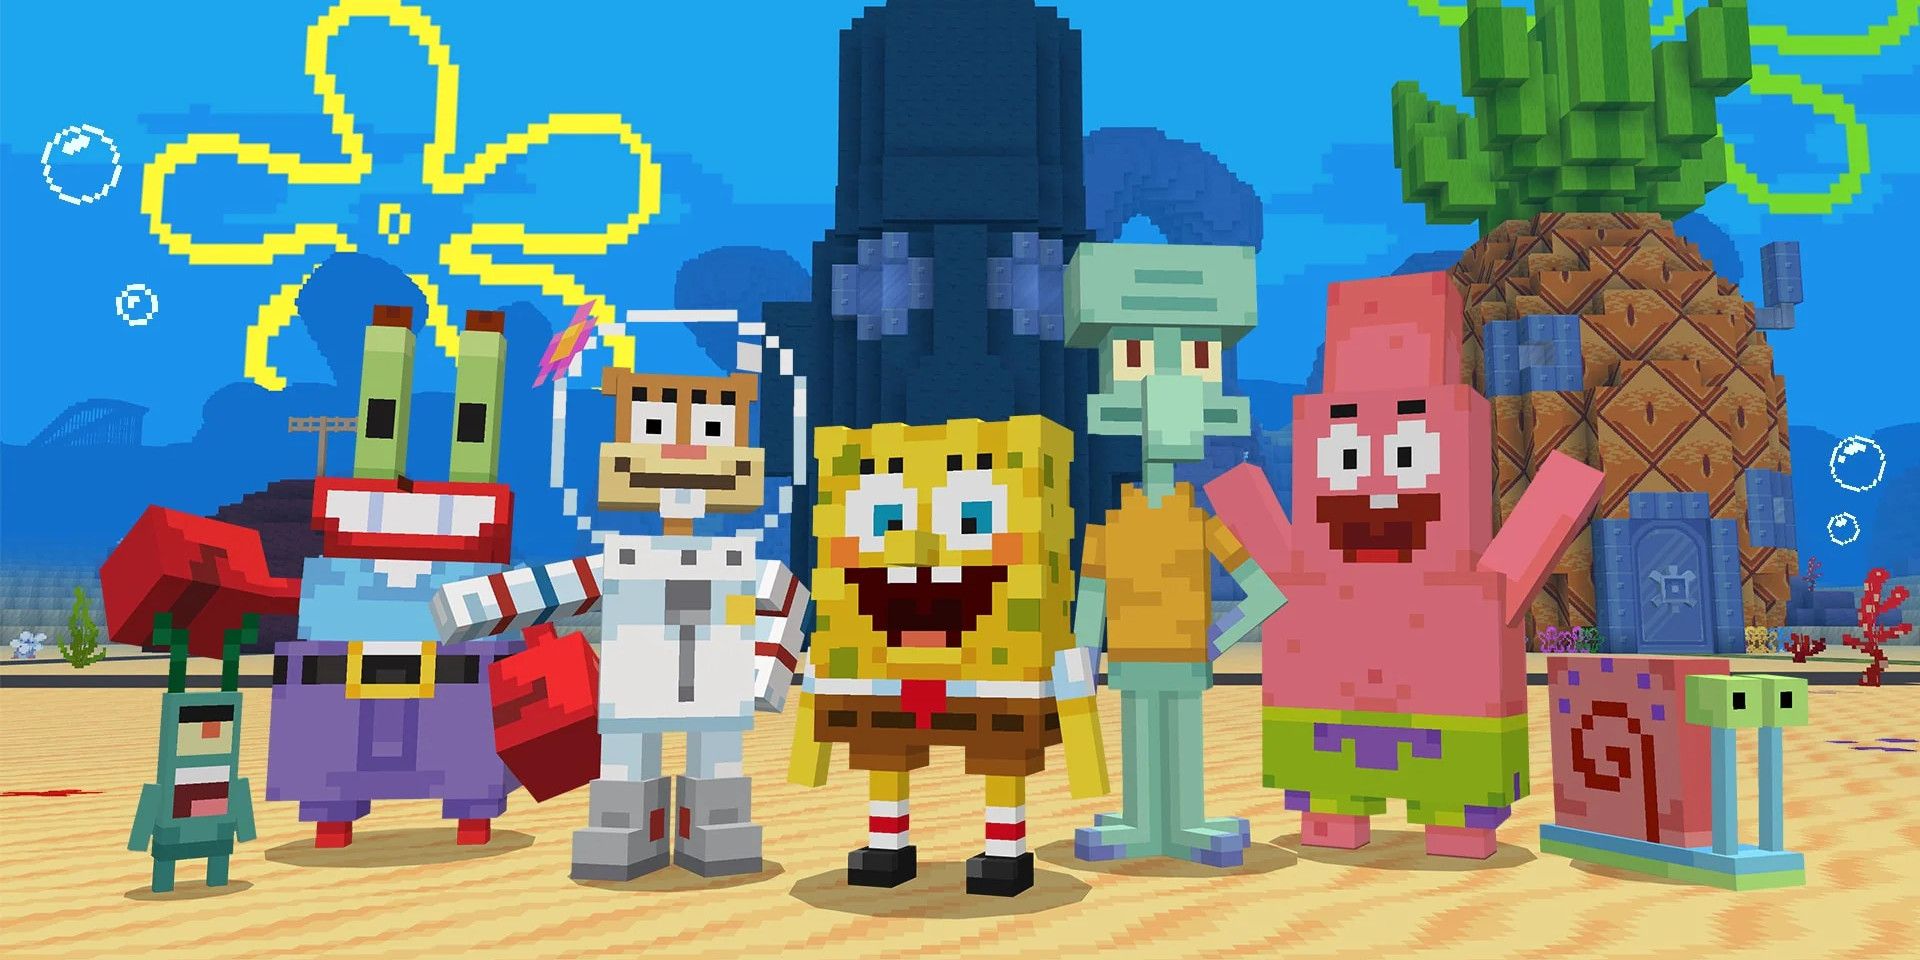 Minecraft Spongebob DLC Group Shot